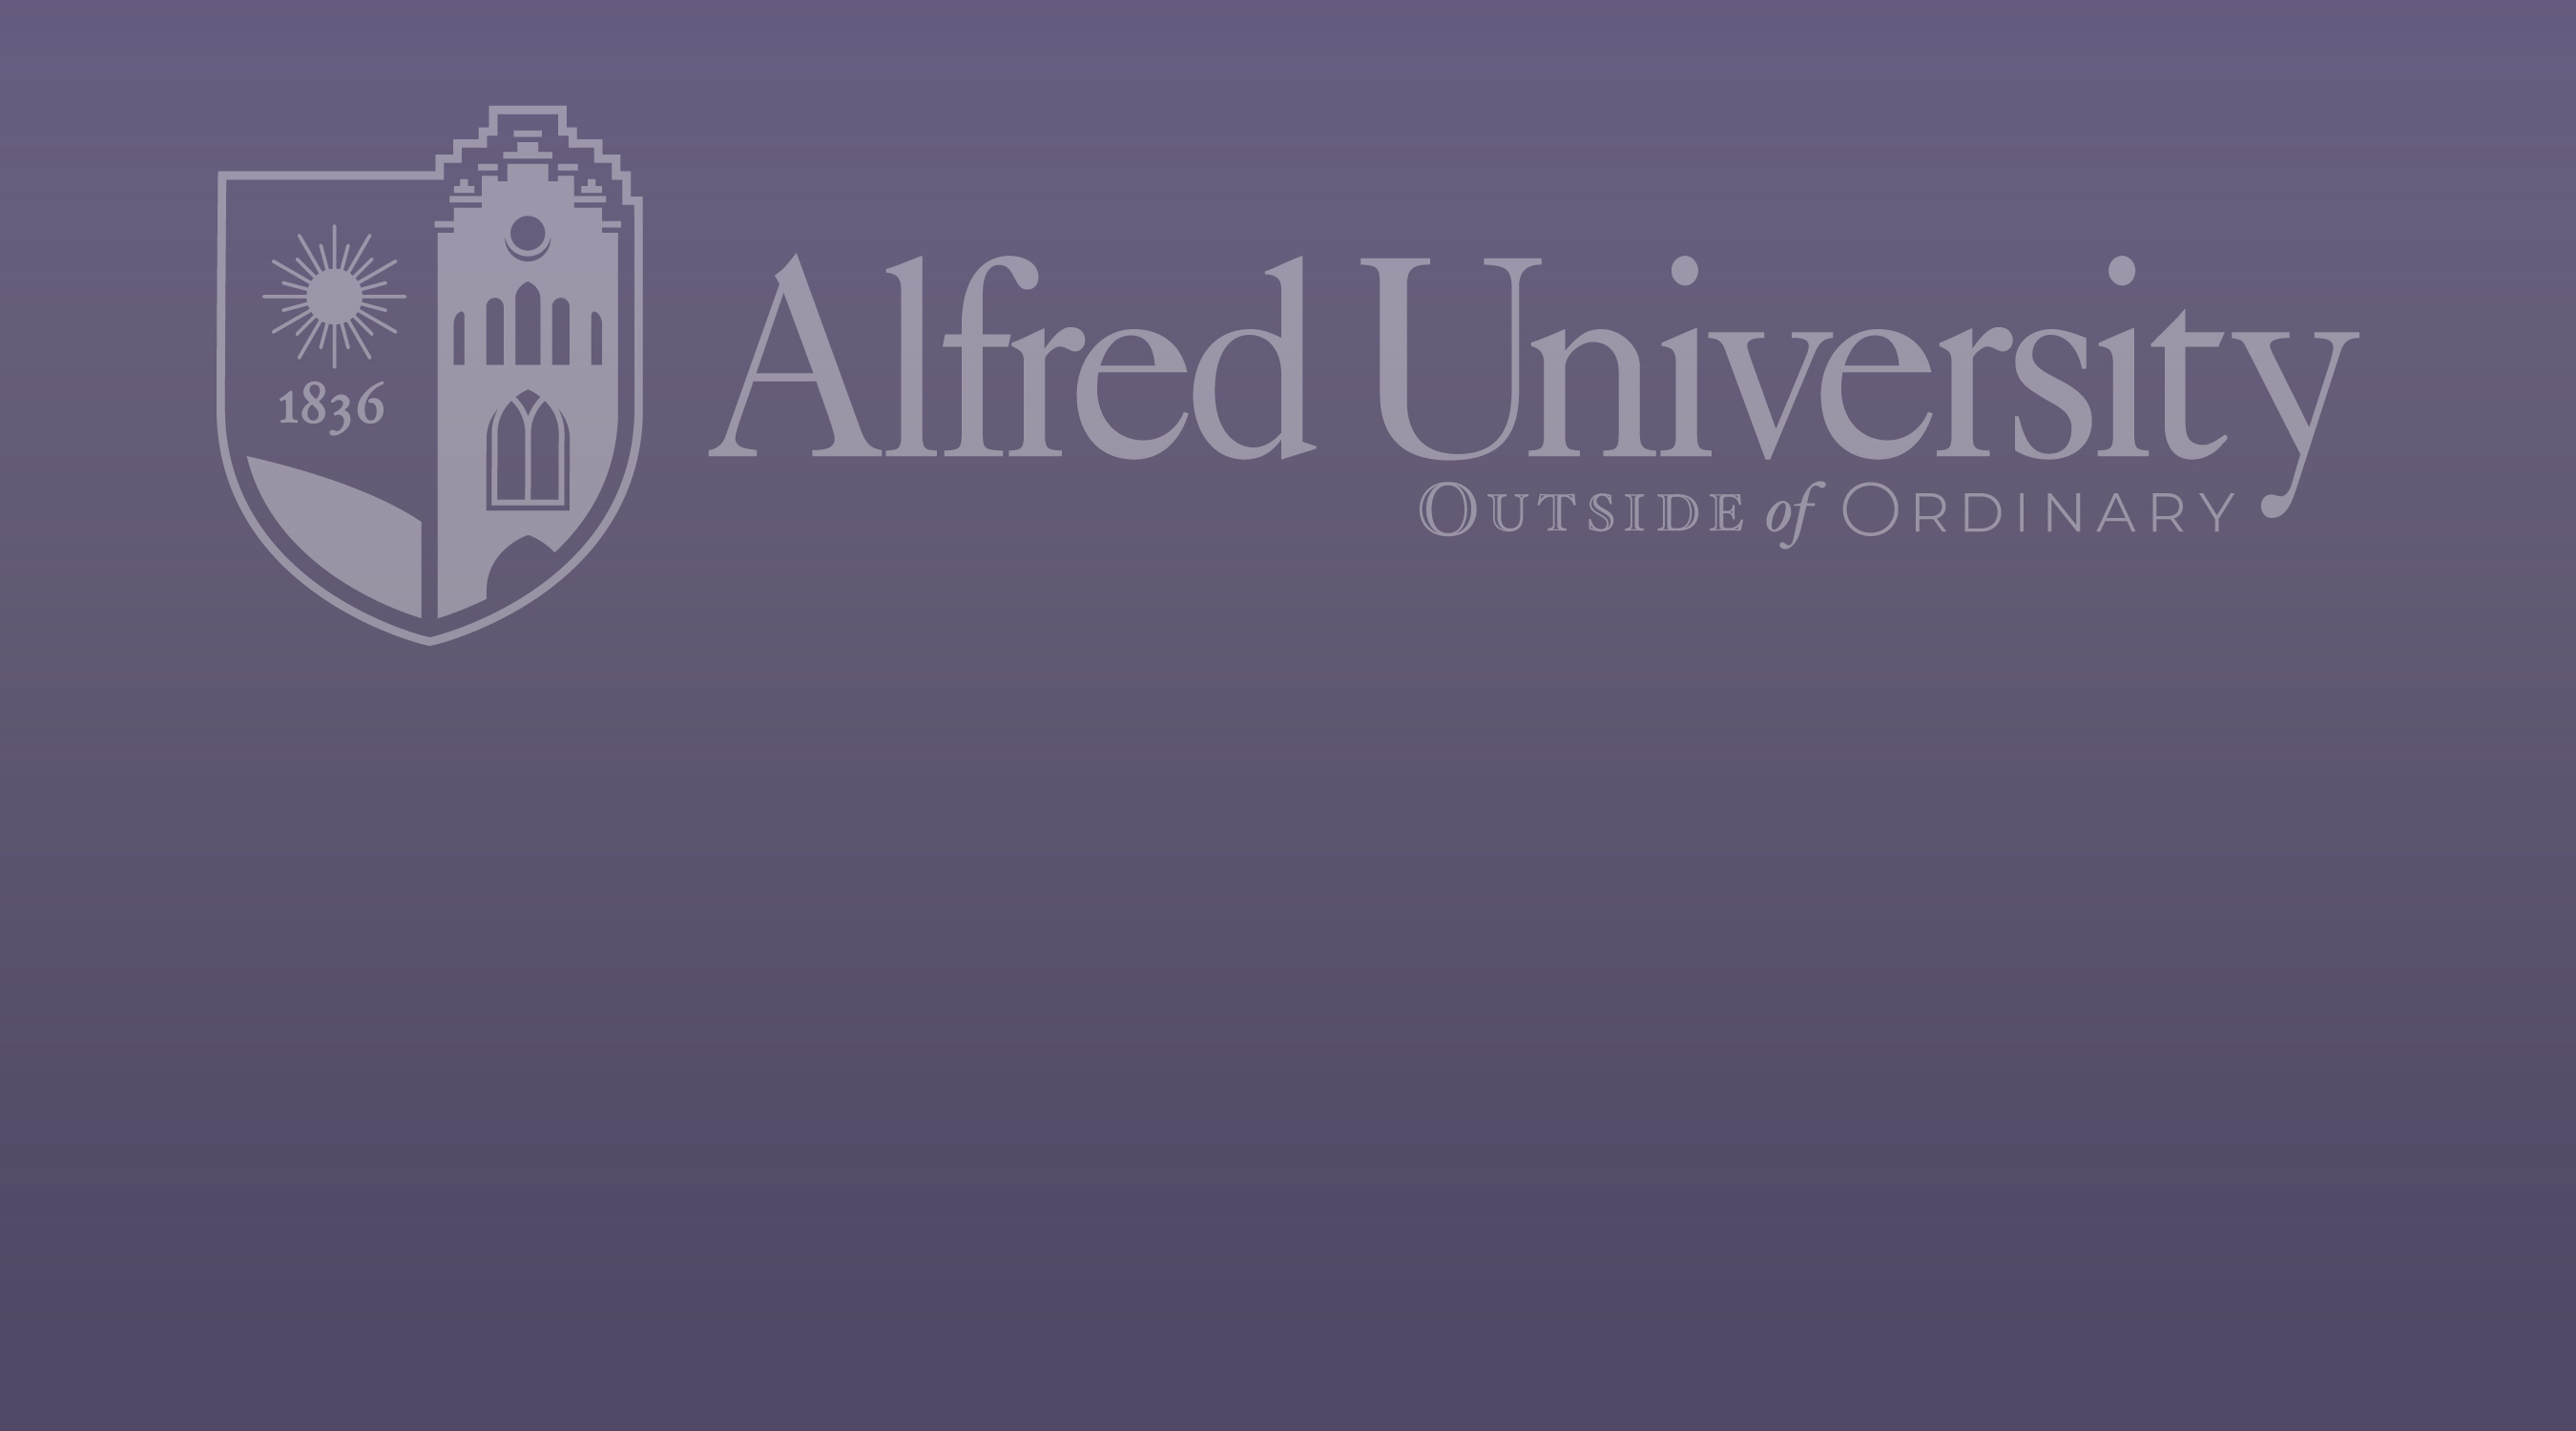 purple with logo background image